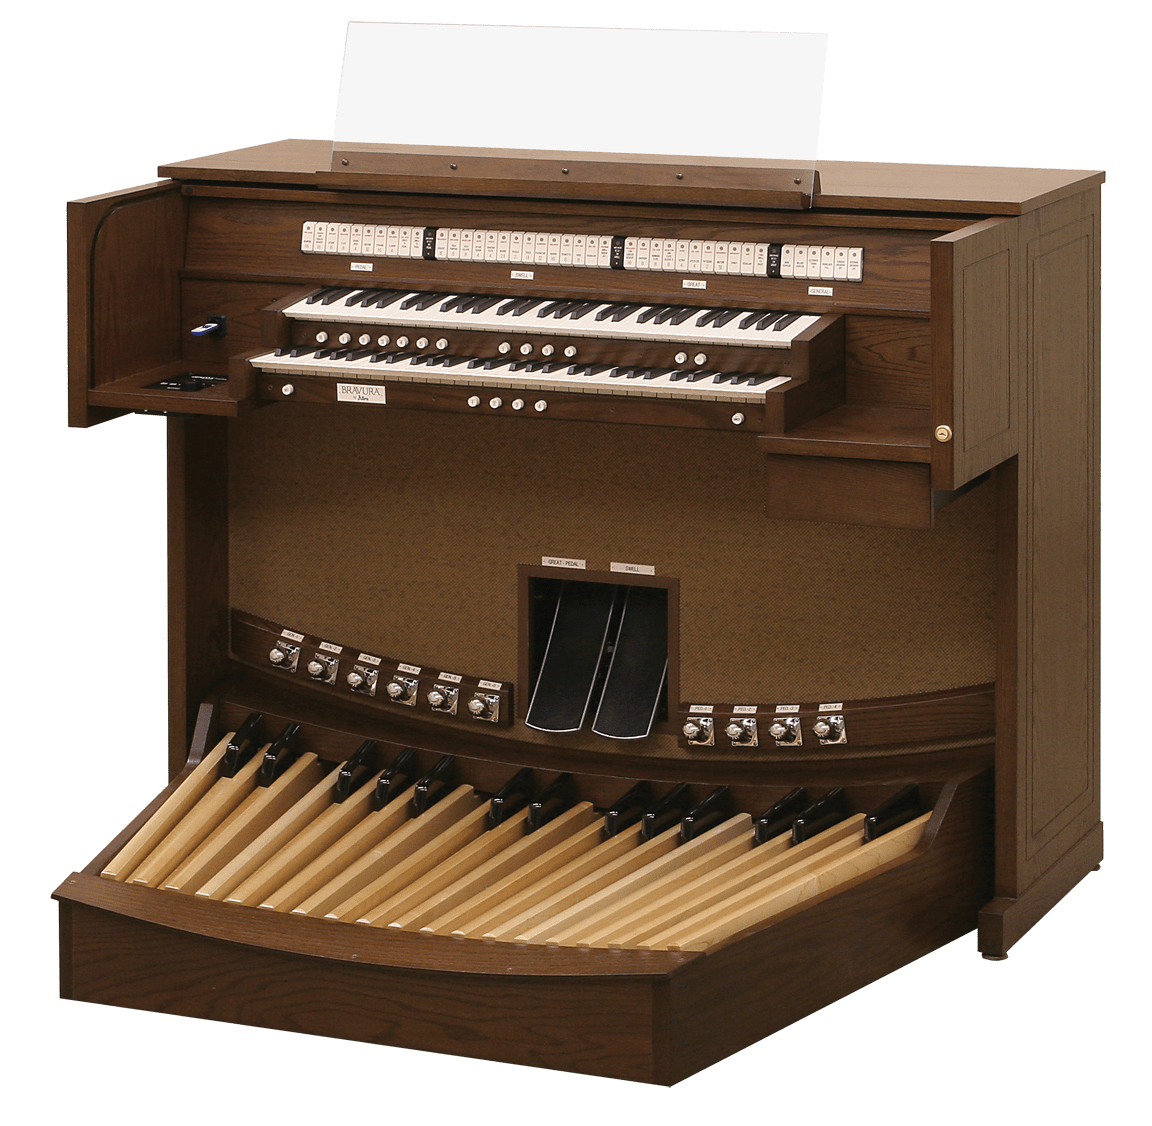 keyboard clipart organ